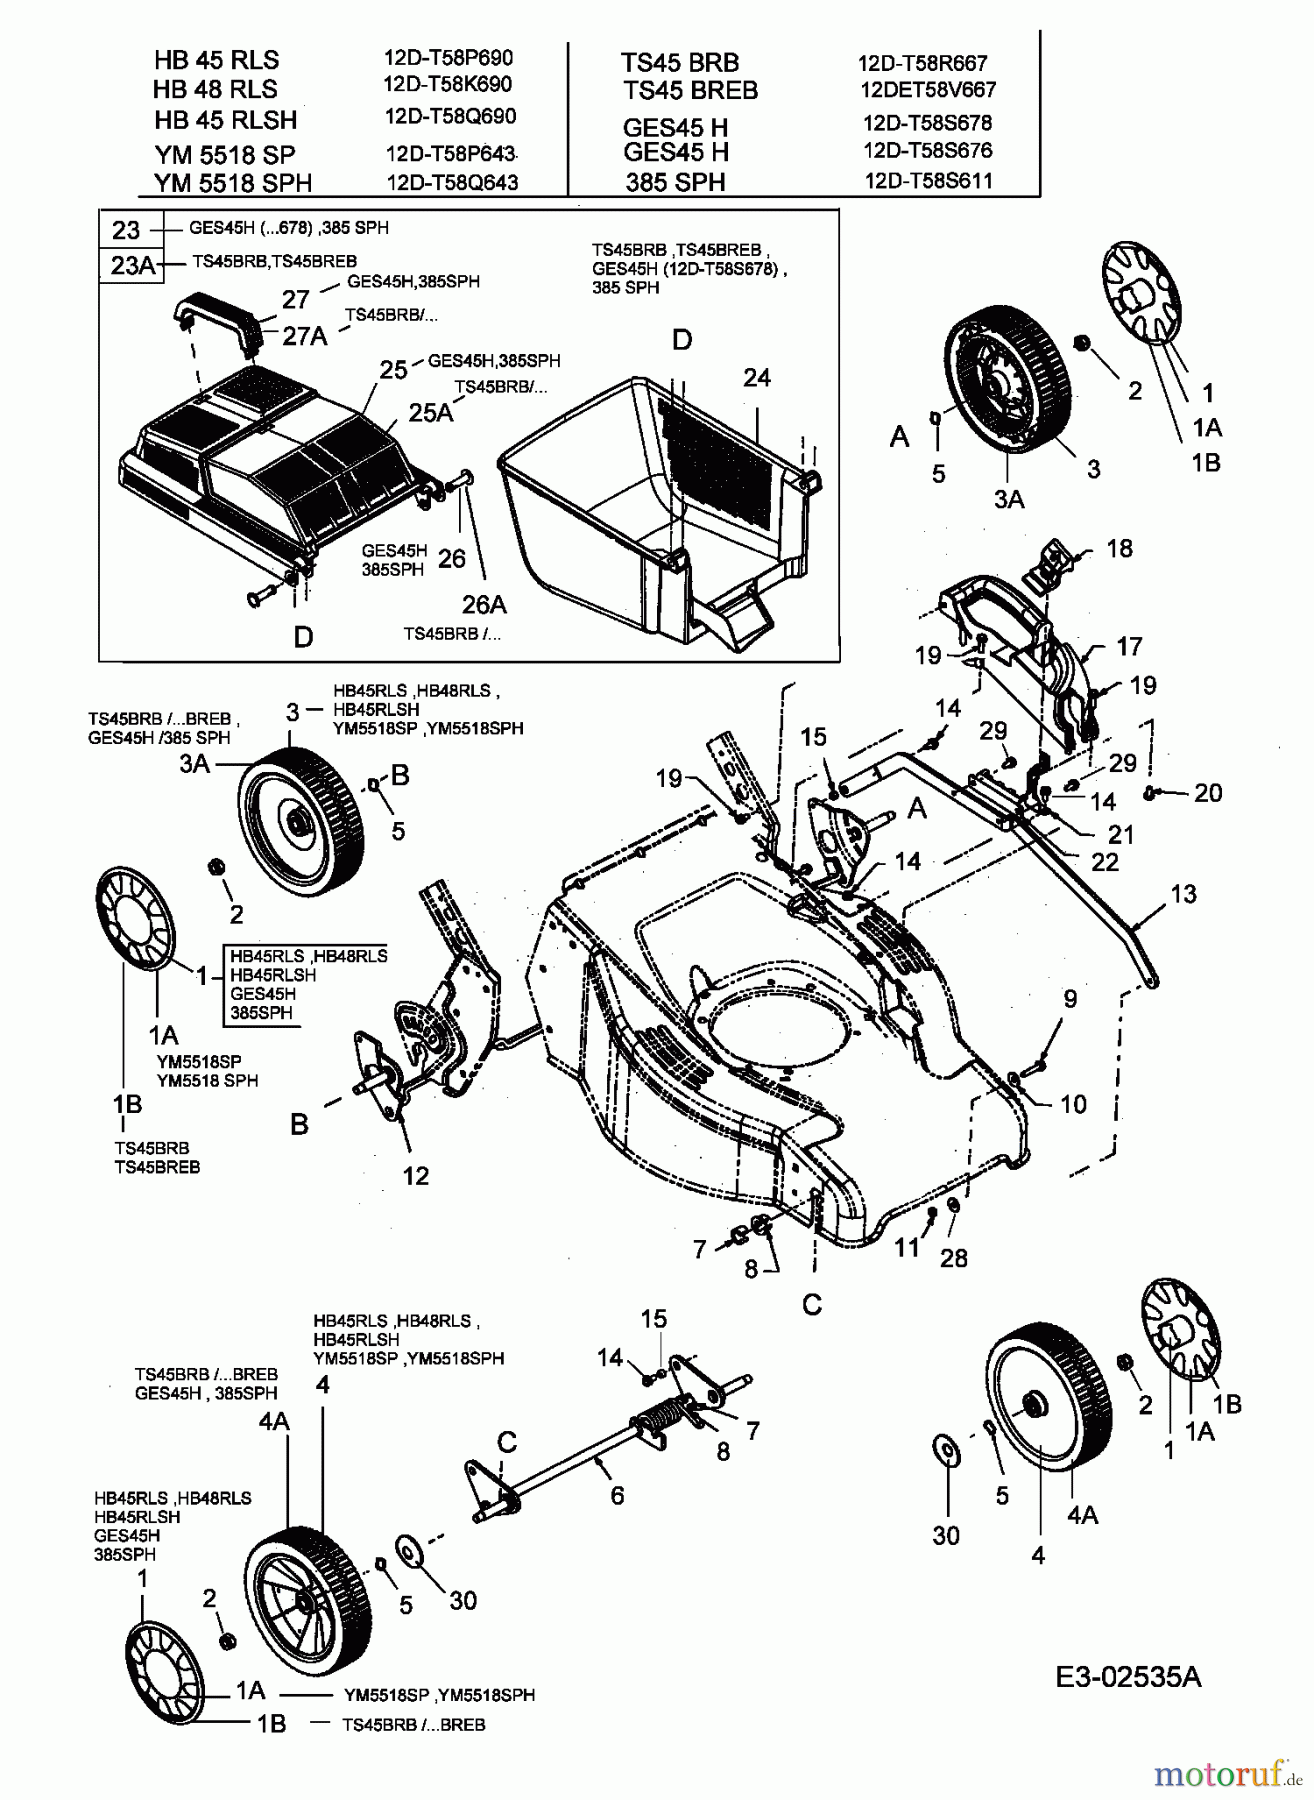  MTD Petrol mower self propelled GES 45 H 12D-T58S676  (2005) Grass box, Wheels, Cutting hight adjustment